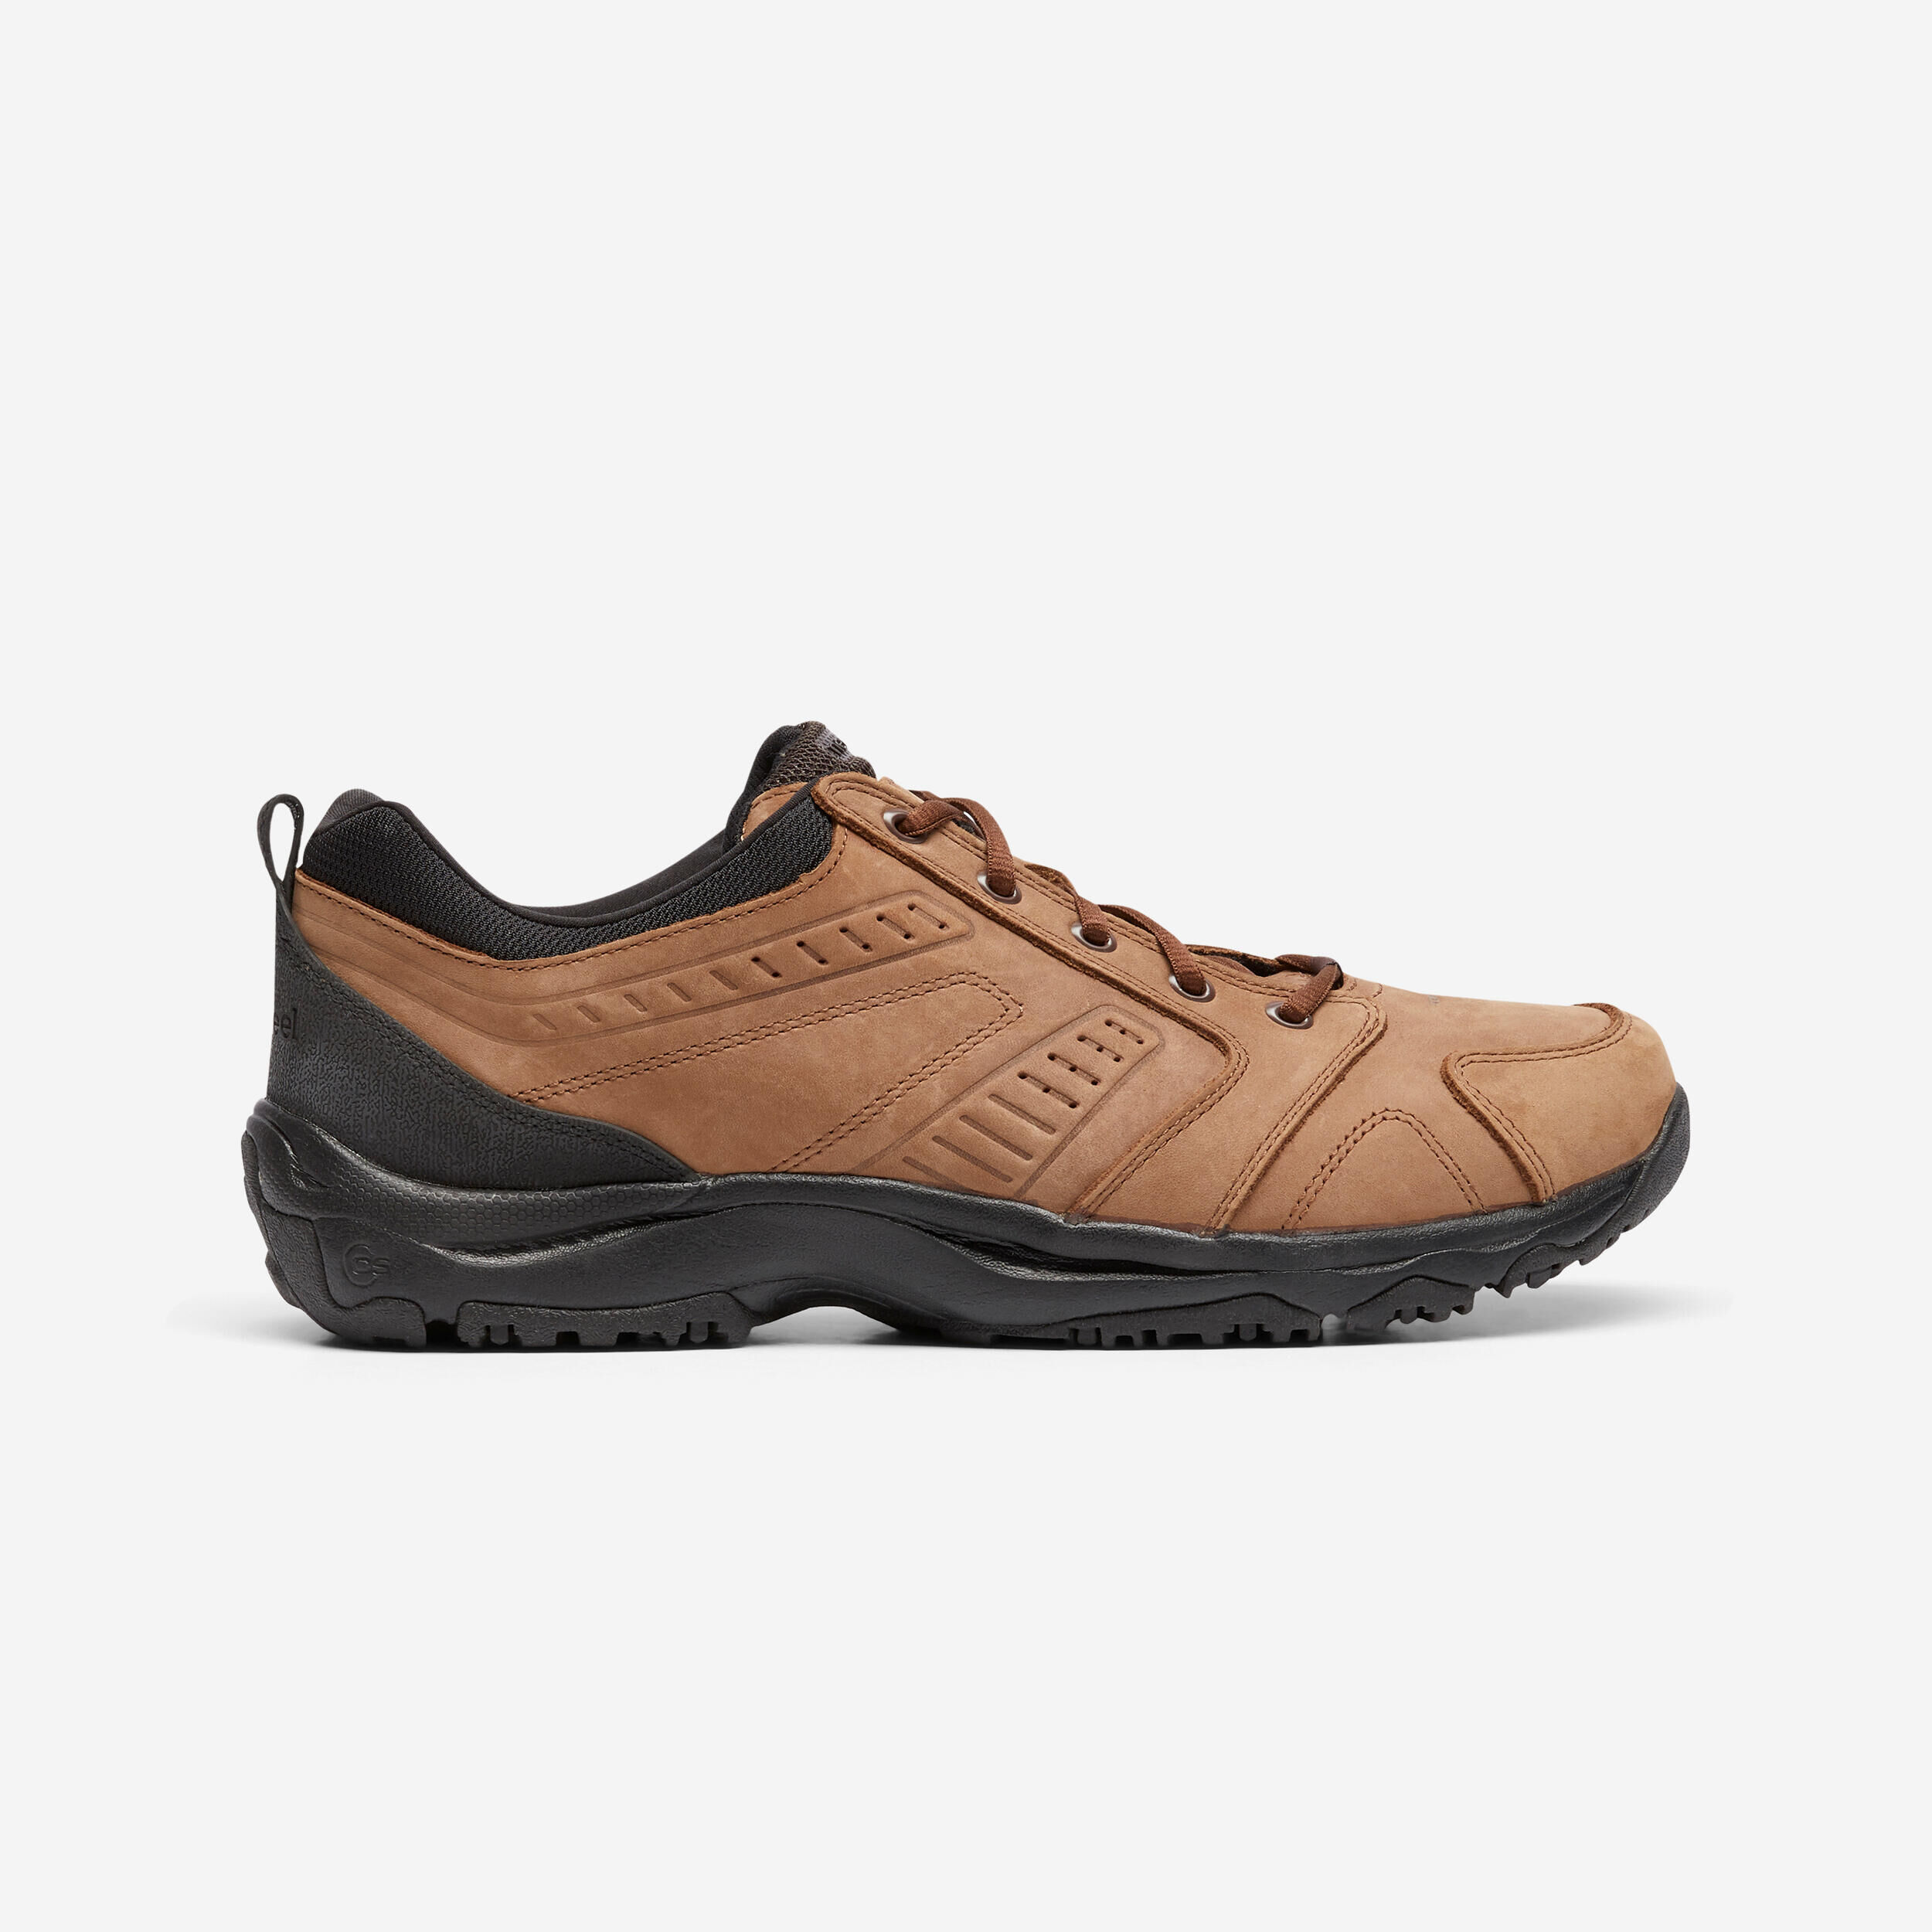 NEWFEEL Nakuru Comfort Men's Urban Walking Leather Shoes - brown